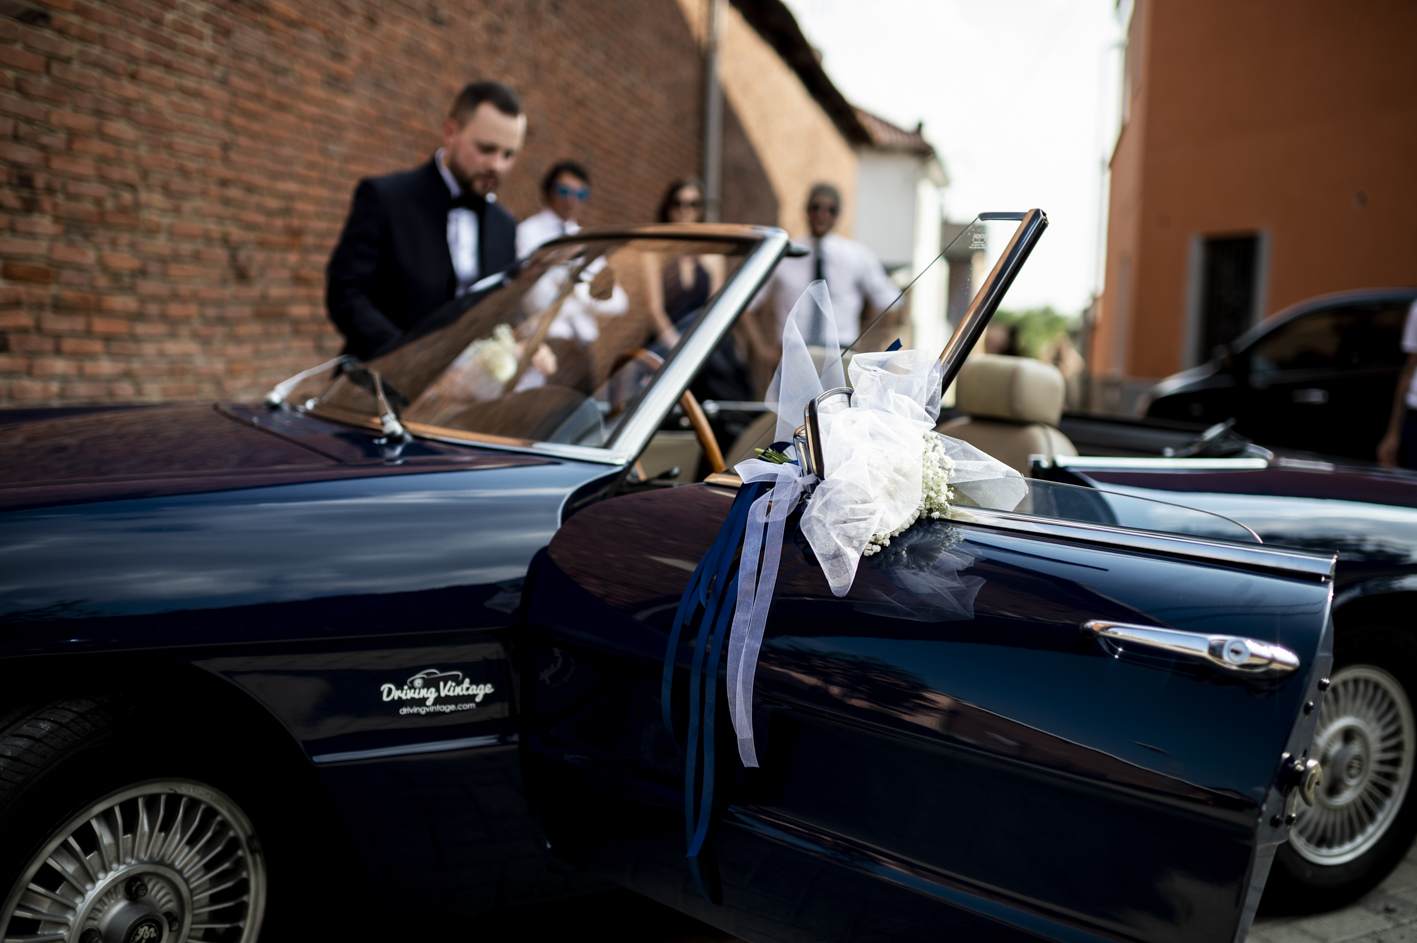 matrimonio Torino Piemonte noleggio Maggiolino Maggiolone_Volkswagen_VW_matrimonio_cerimonia_evento_auto d'epoca_classic car_wedding_events_ceremony